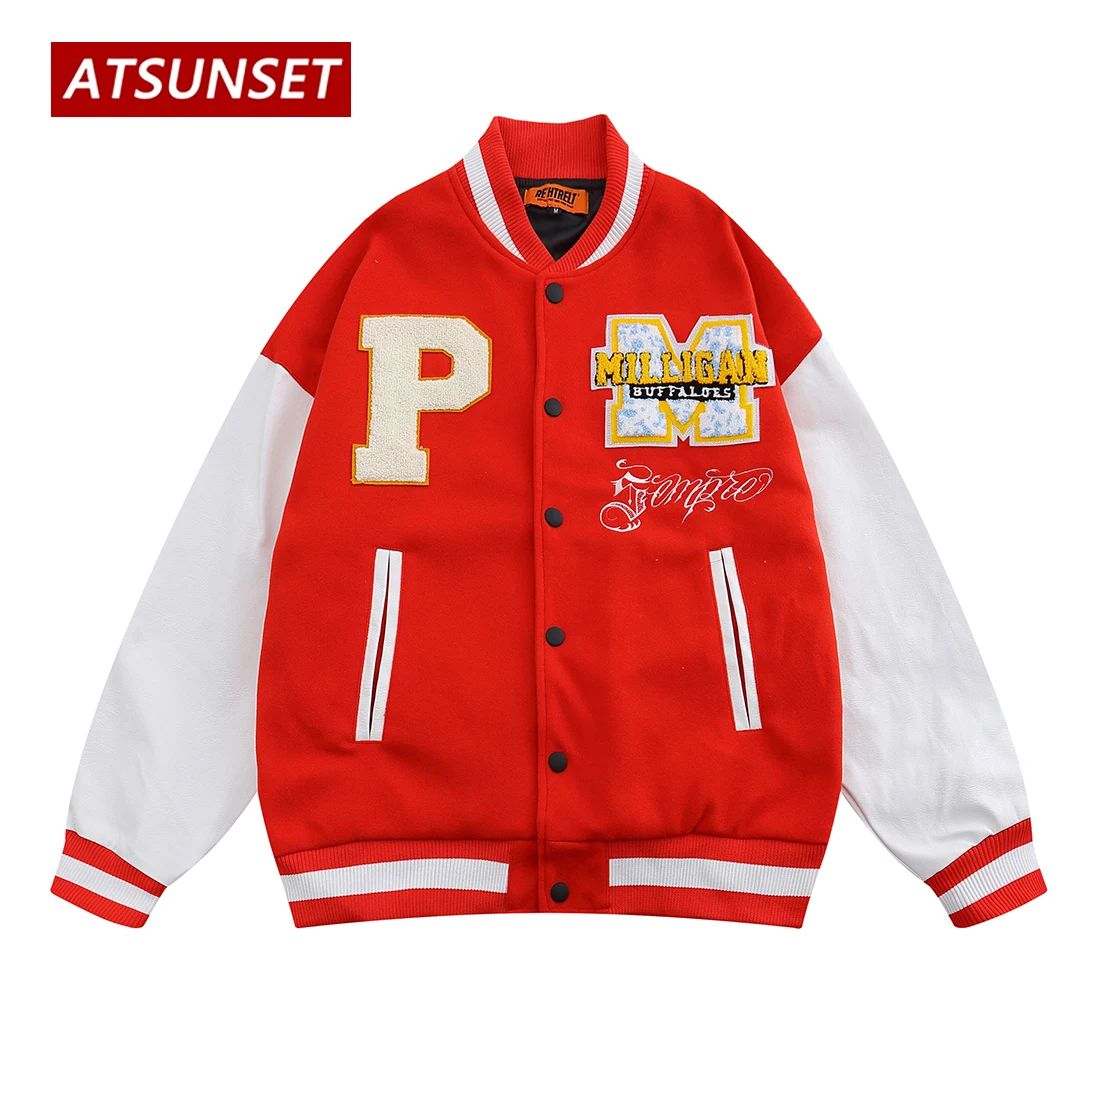 ATSUNSET Big Letter P.M Hip Hop Baseball Jacket Harajuku Retro Varsity Jacket Streetwear Fashion Cotton Jacket Coat Tops